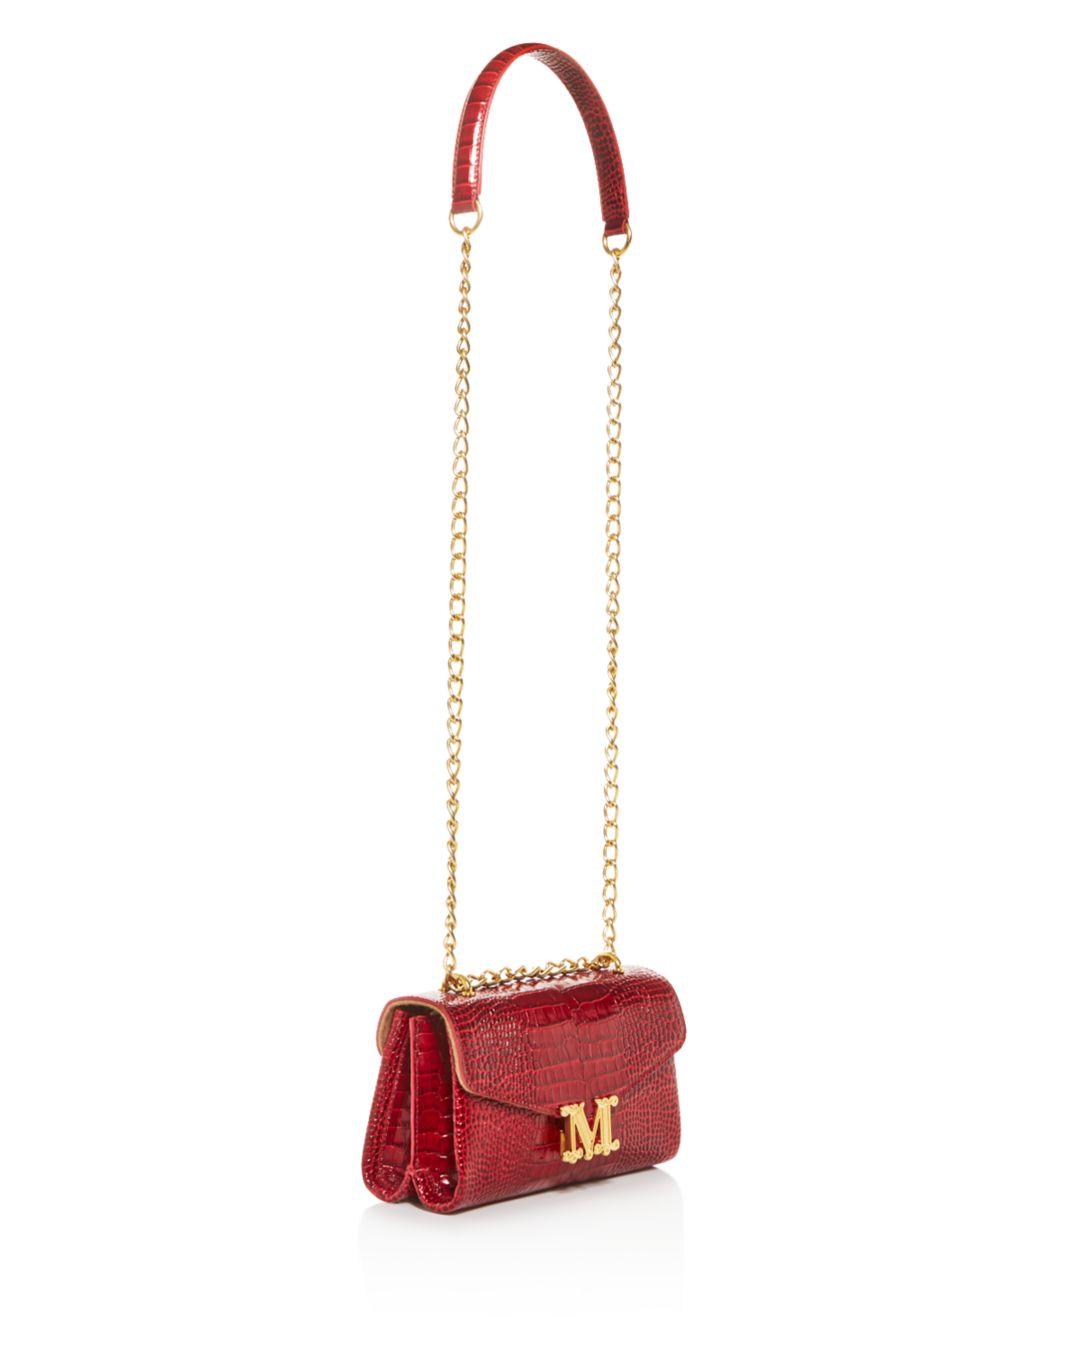 Max Mara Linda Croc - Embossed Leather Shoulder Bag in Red/Gold (Red) | Lyst